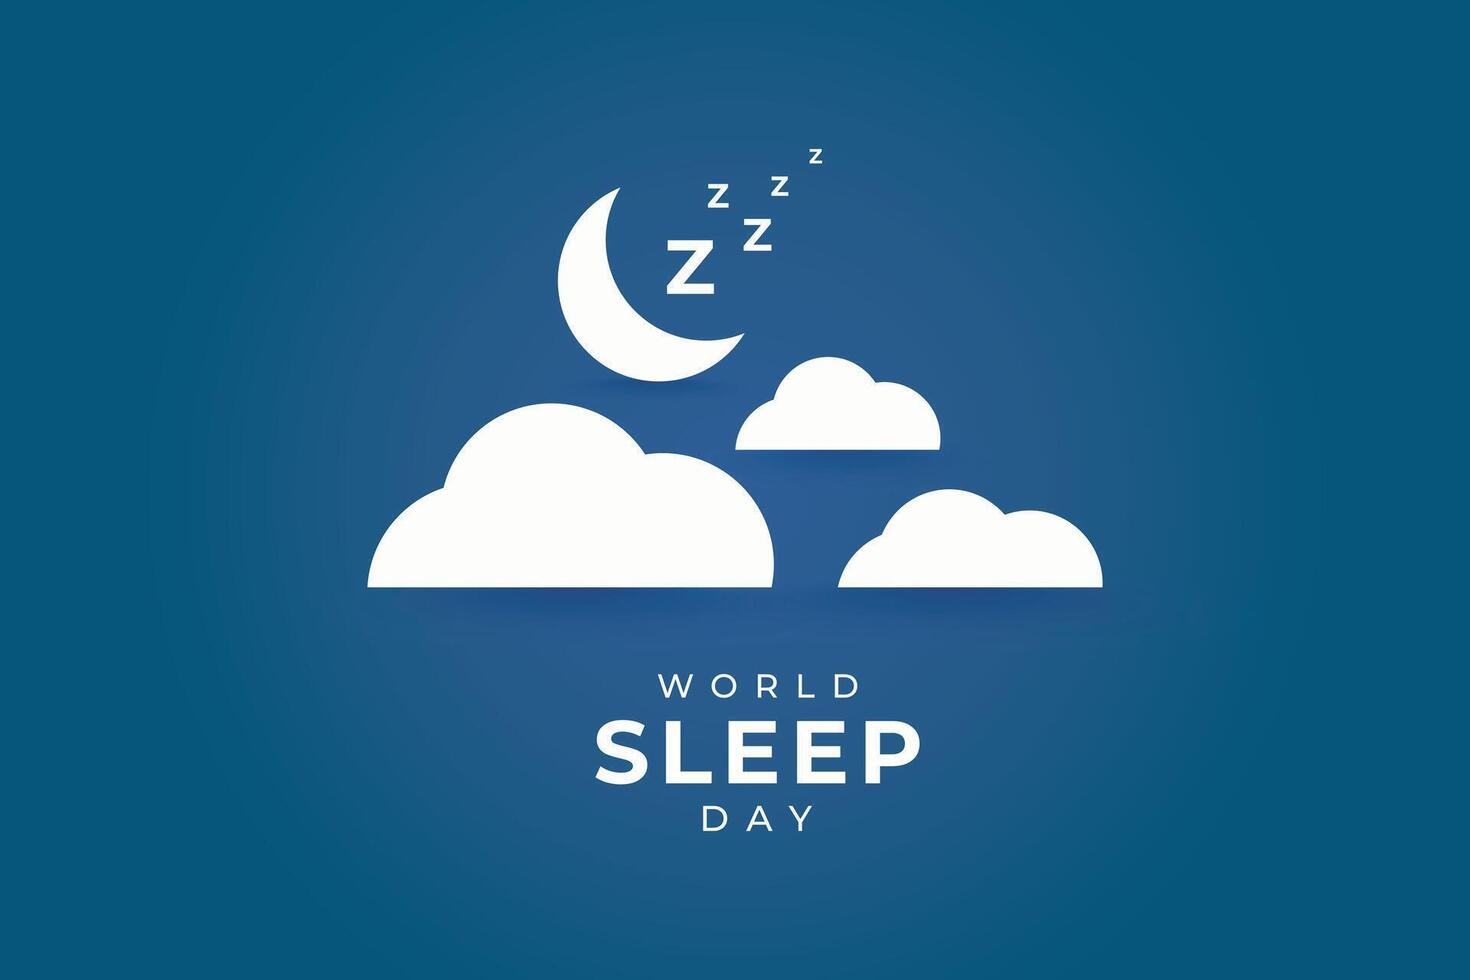 World Sleep Day Vector Design Illustration for Background, Poster, Banner, Advertising, Greeting Card